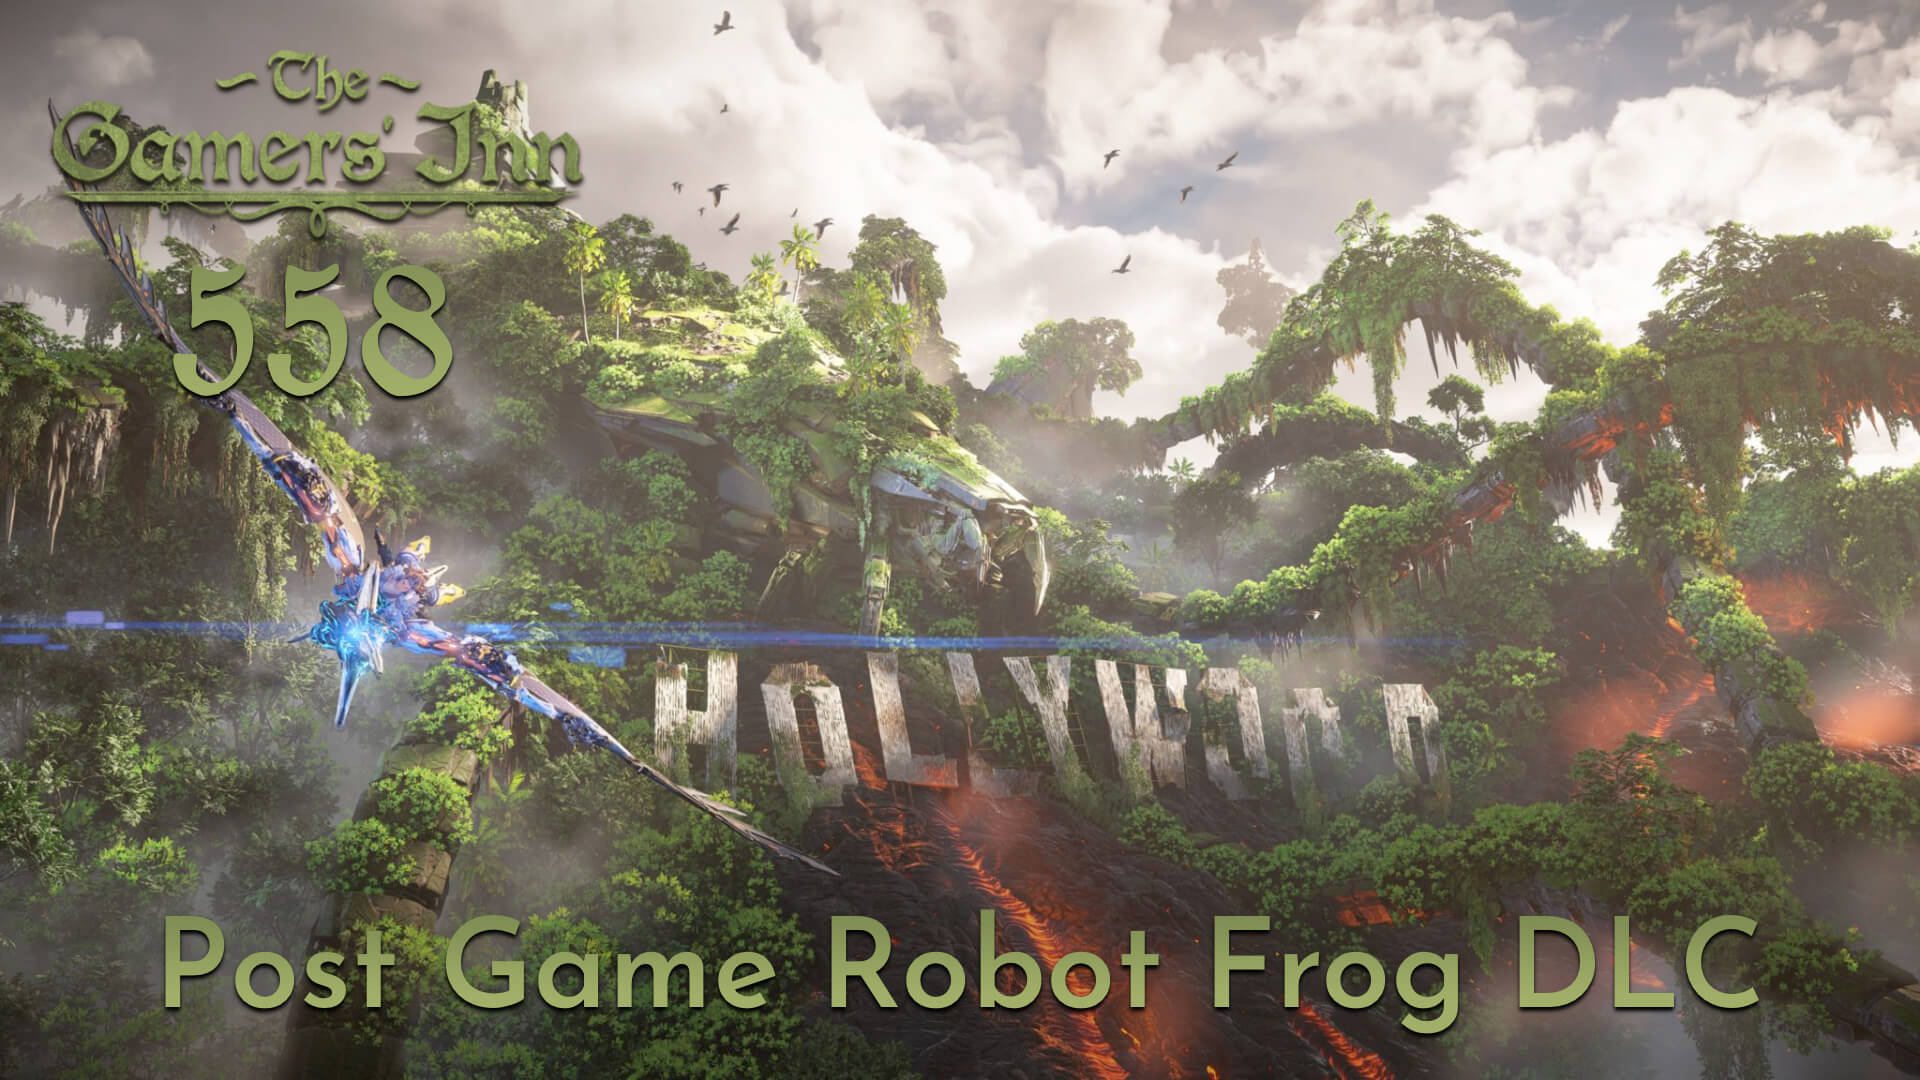 TGI 558 – Post Game Robot Frog DLC